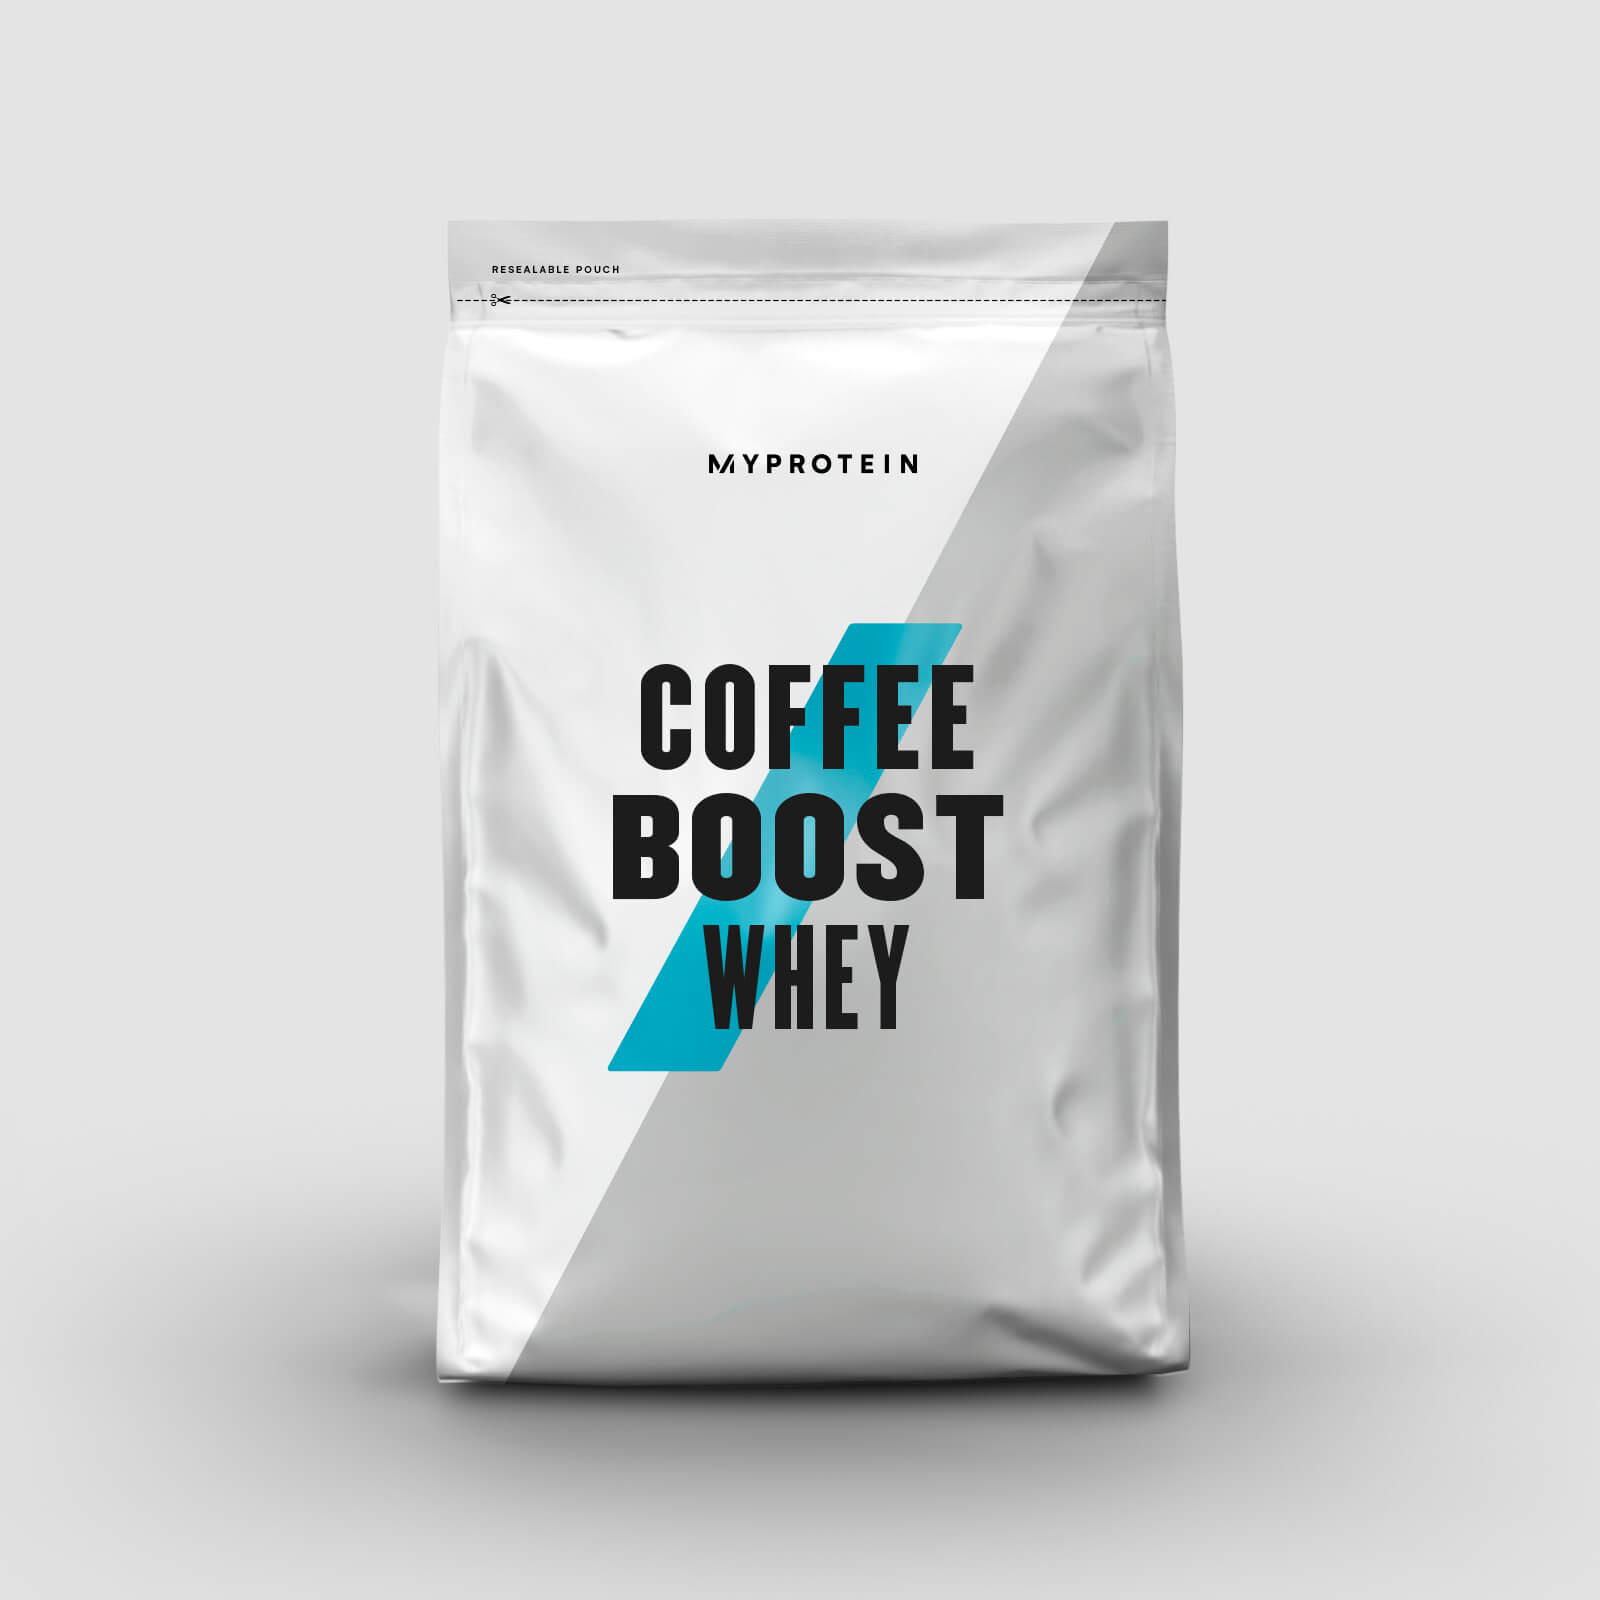 Myprotein Coffee Boost Whey - 1kg - Iced Latte